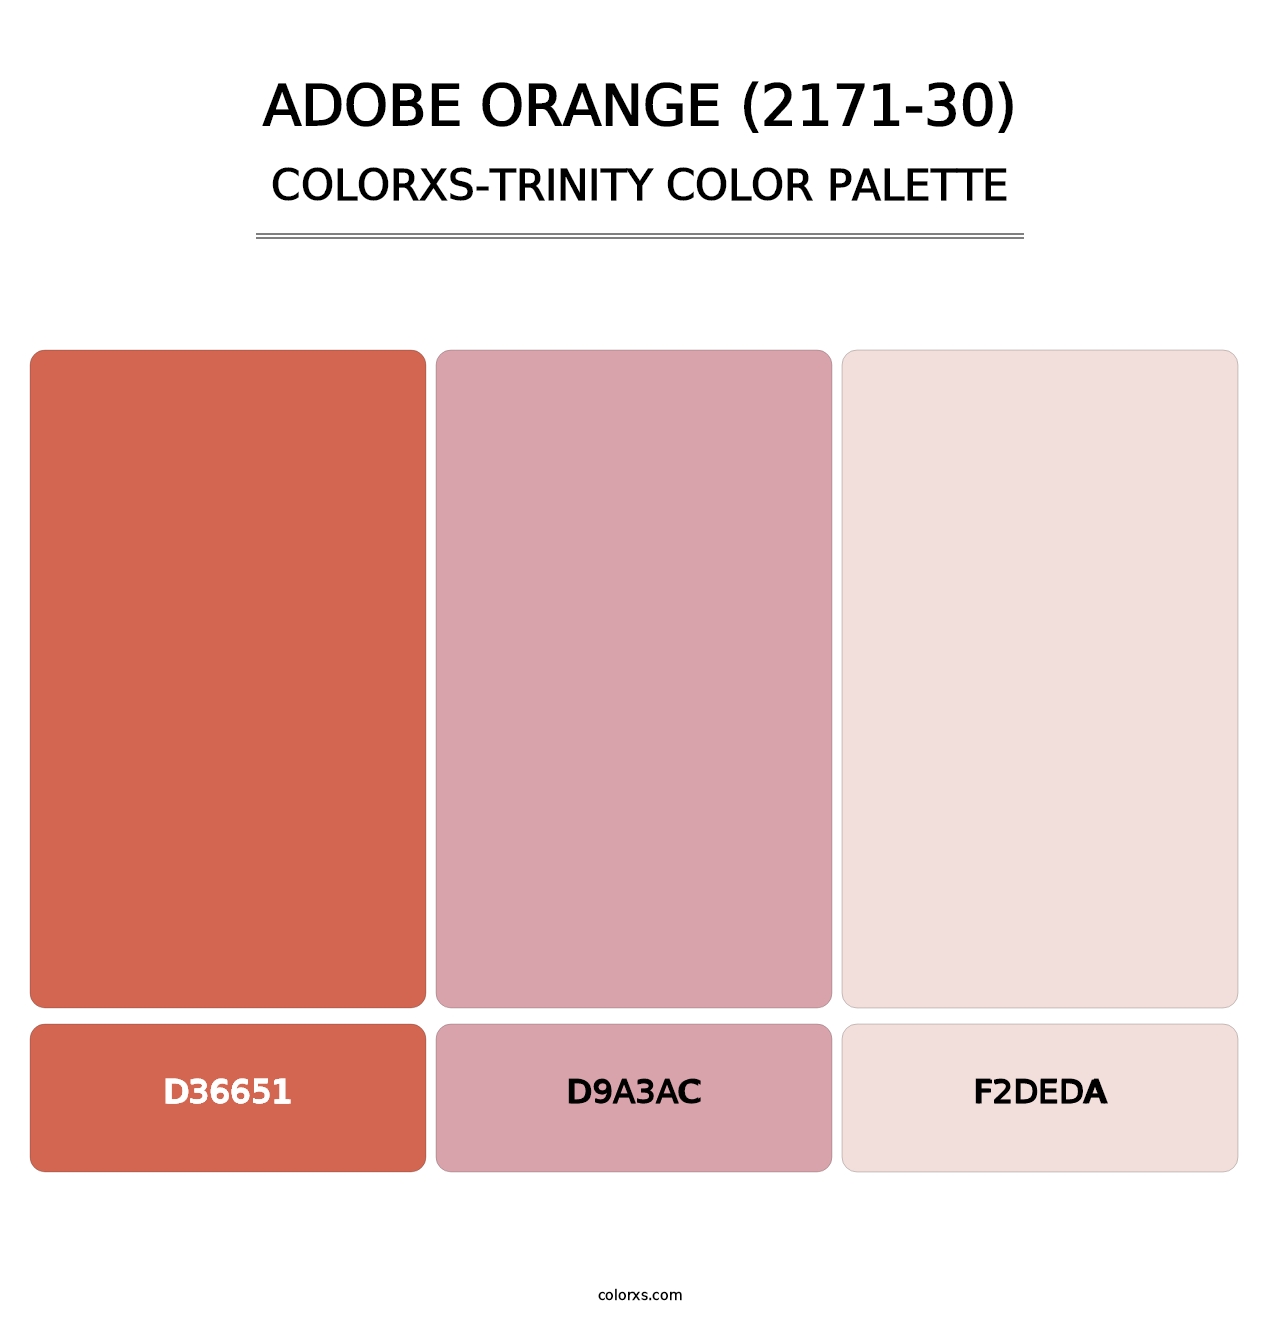 Adobe Orange (2171-30) - Colorxs Trinity Palette